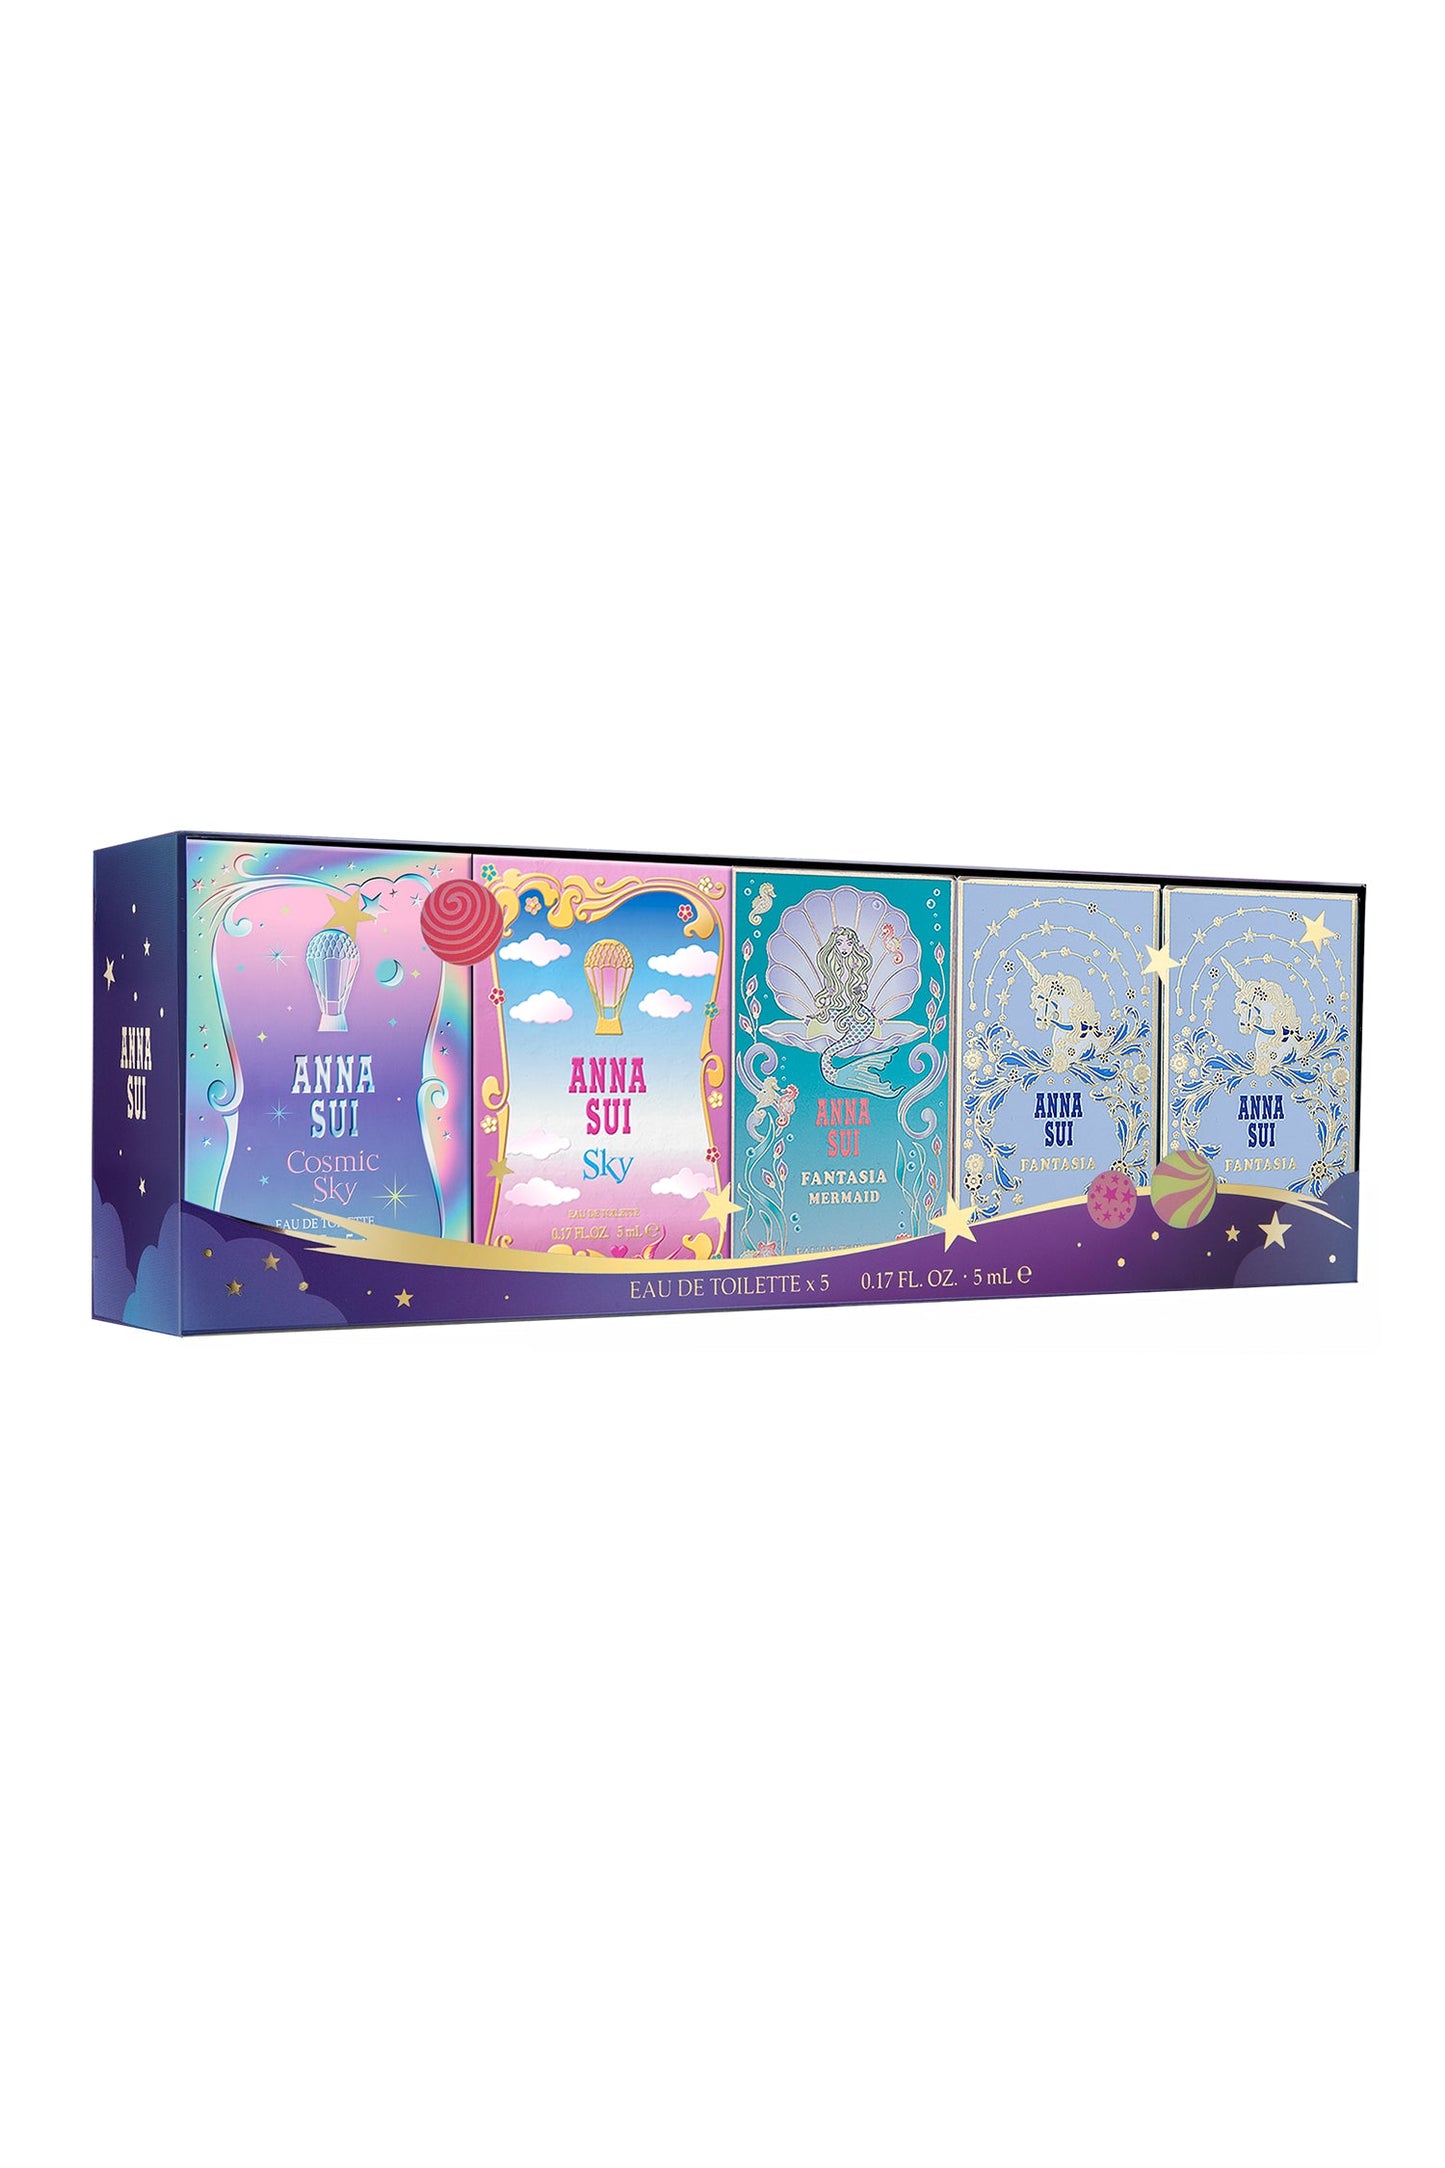 Fragrance Mini Set: new fragrances Cosmic Sky, Sky, Fantasia Mermaid, and Fantasia 2 units